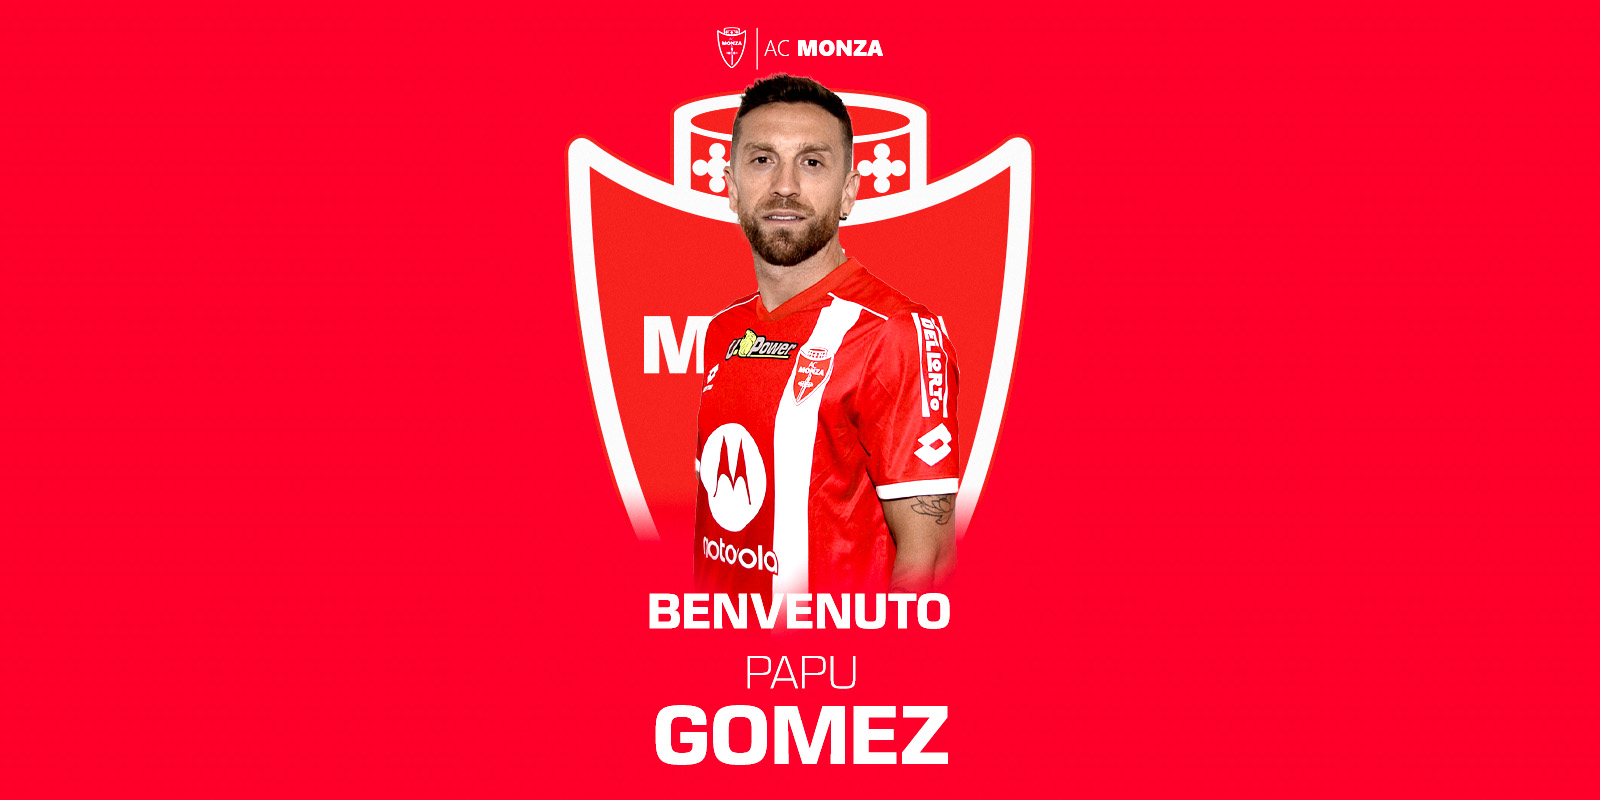 Papu Gomez joins AC Monza